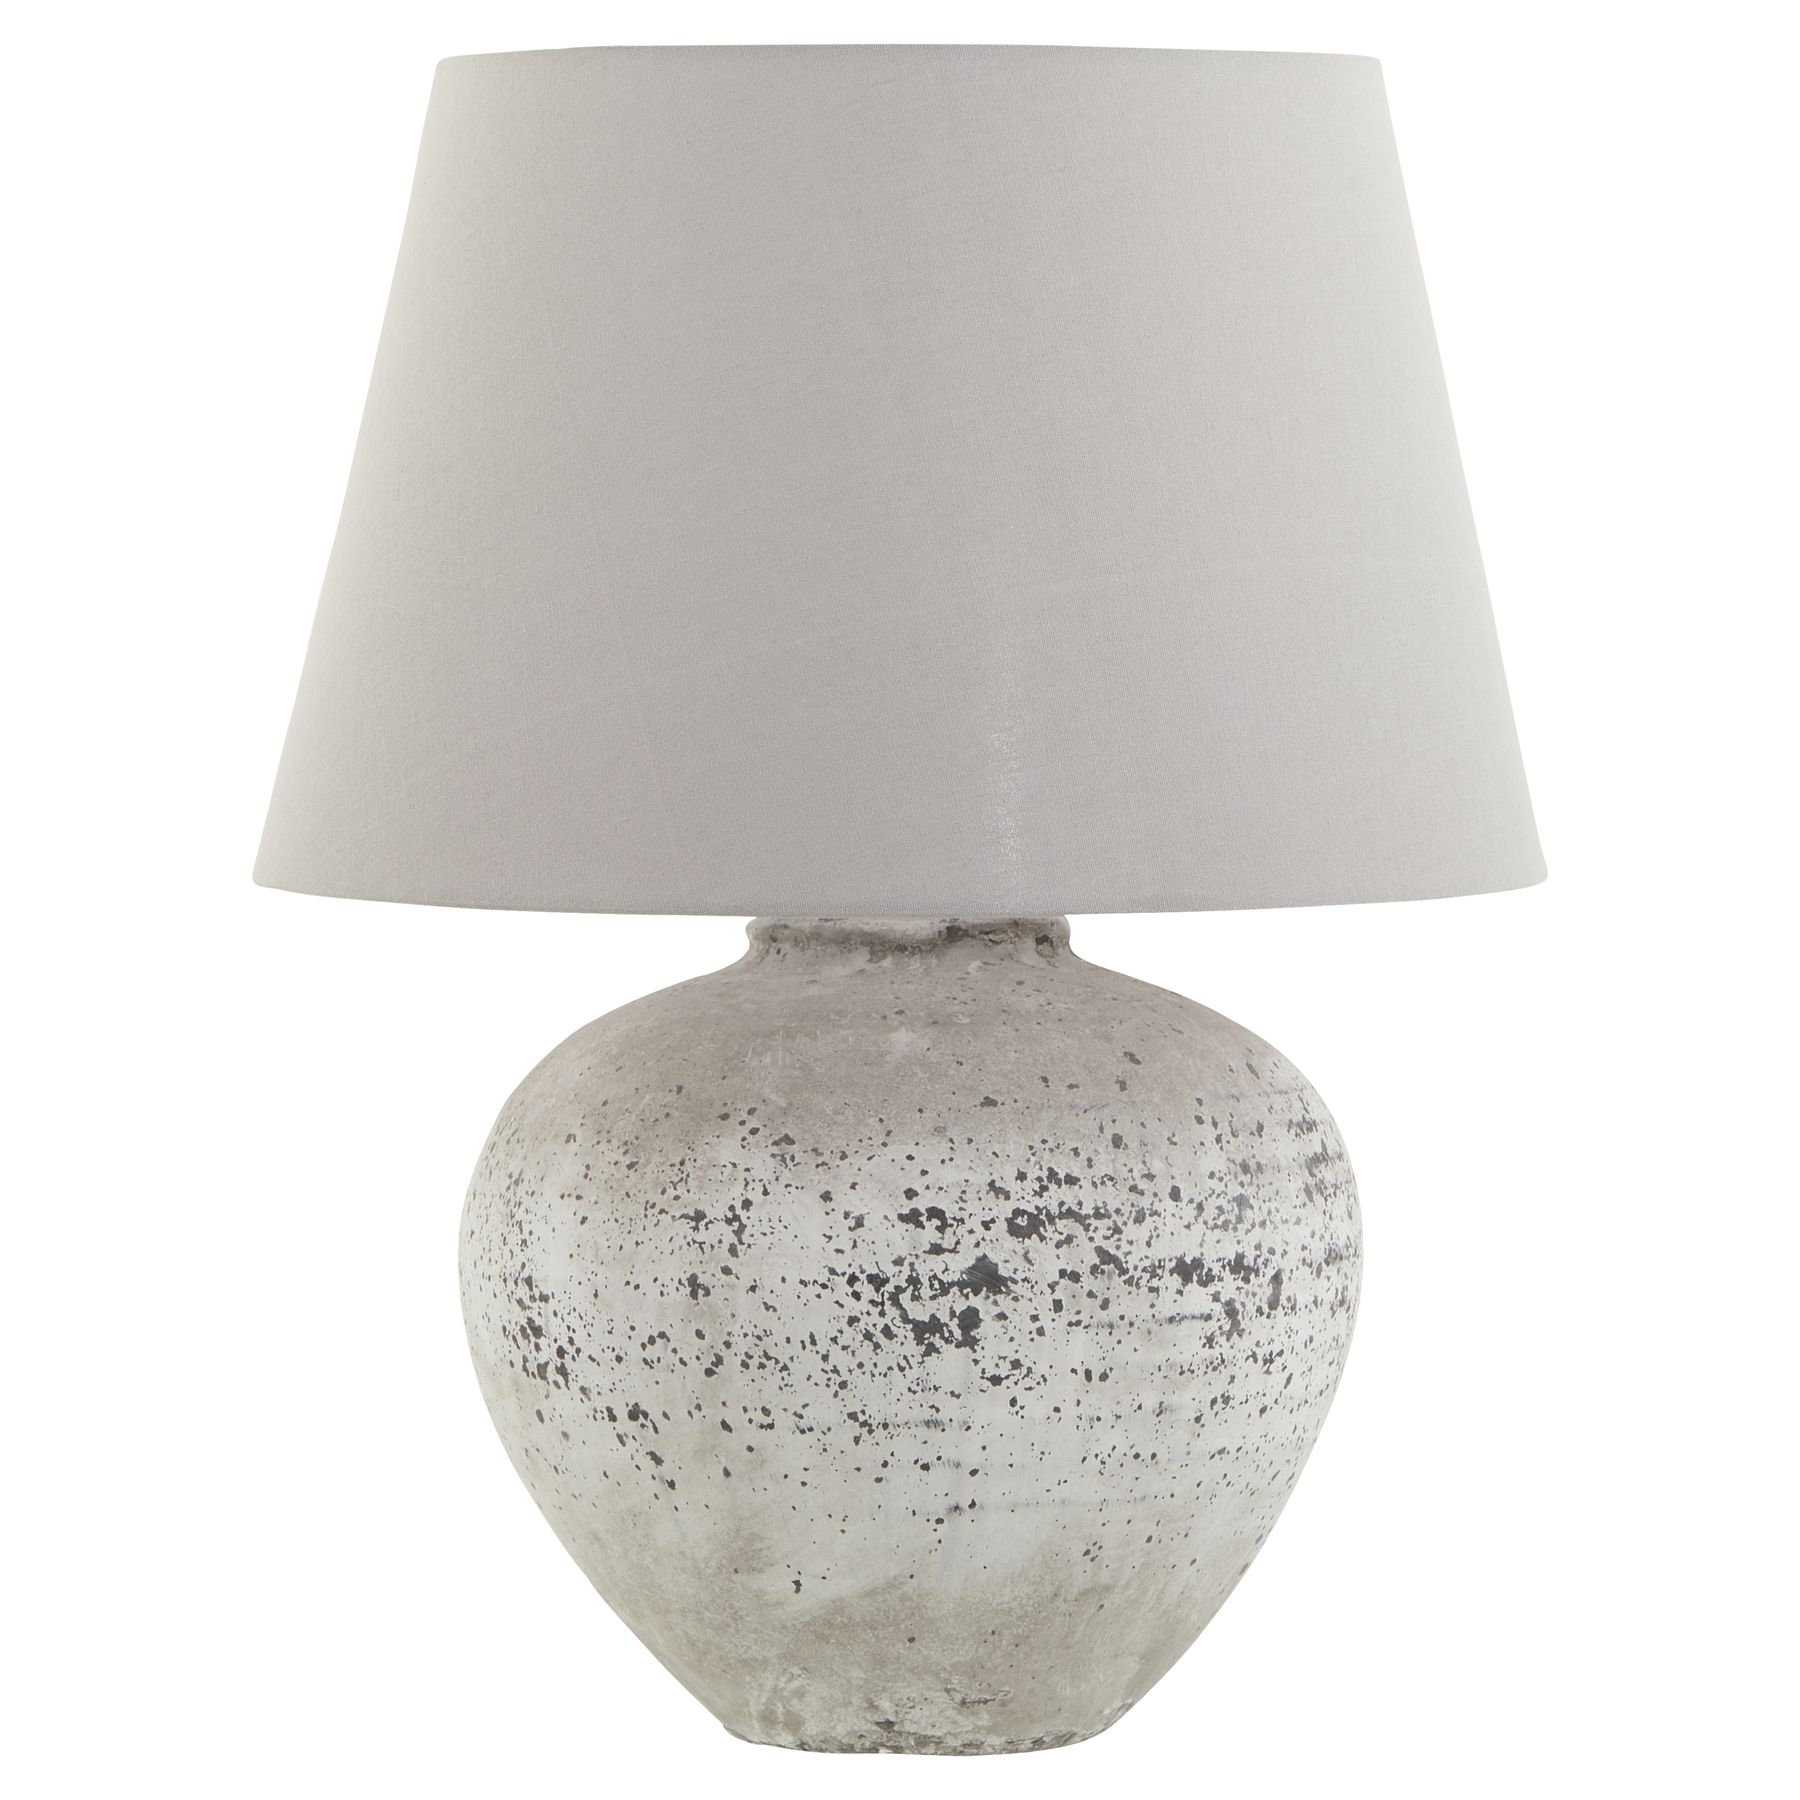 Regola Large Stone Ceramic Lamp - Image 1